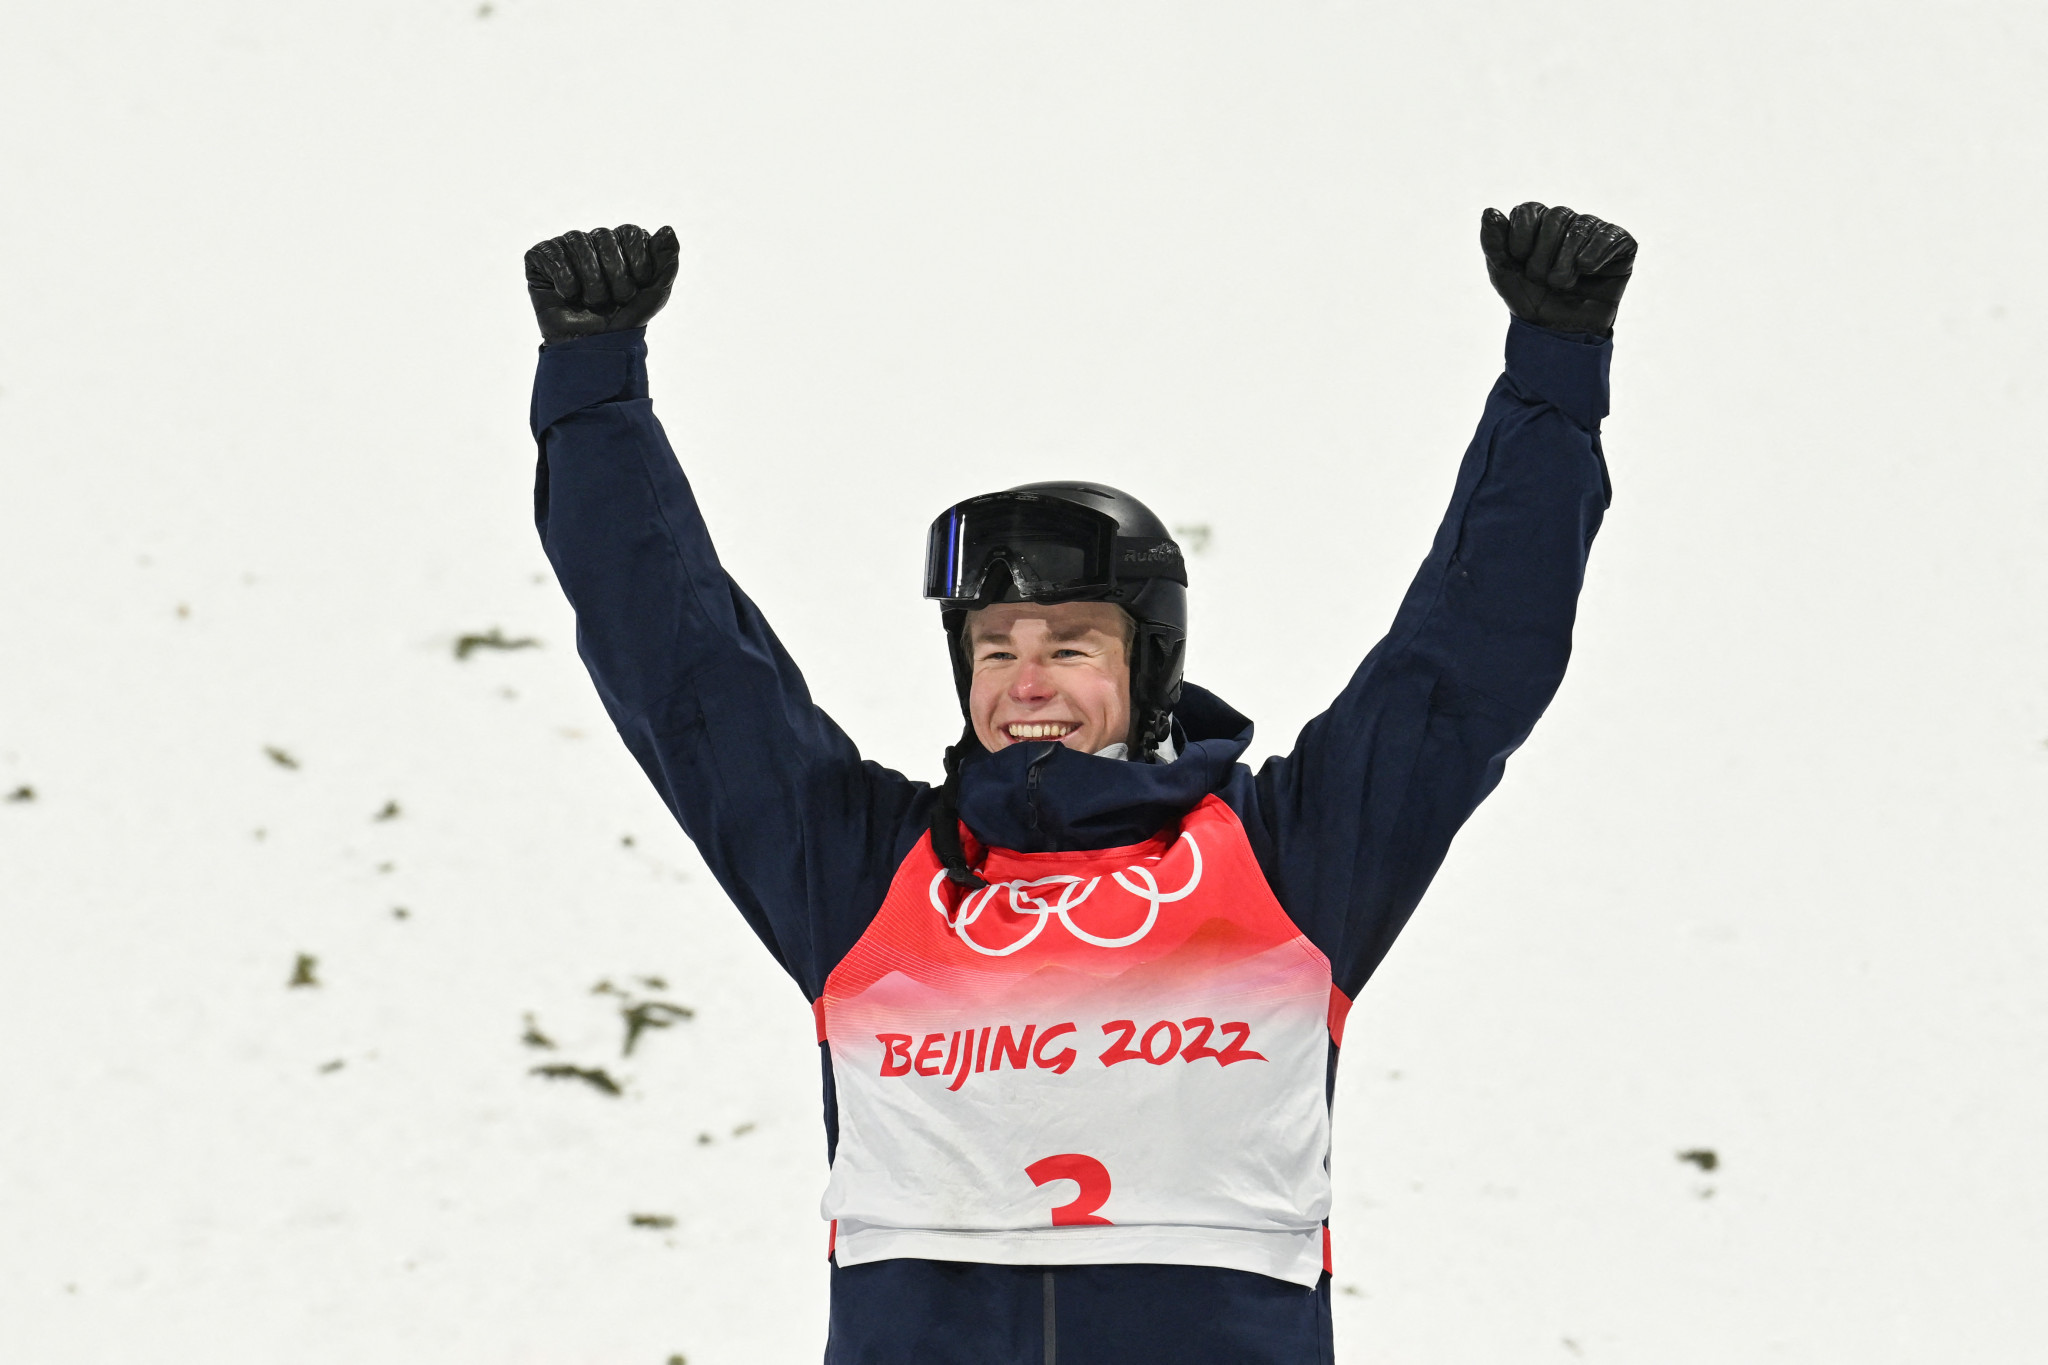 Sweden’s Walter Wallberg earned the men's moguls title at Beijing 2022 ©Getty Images